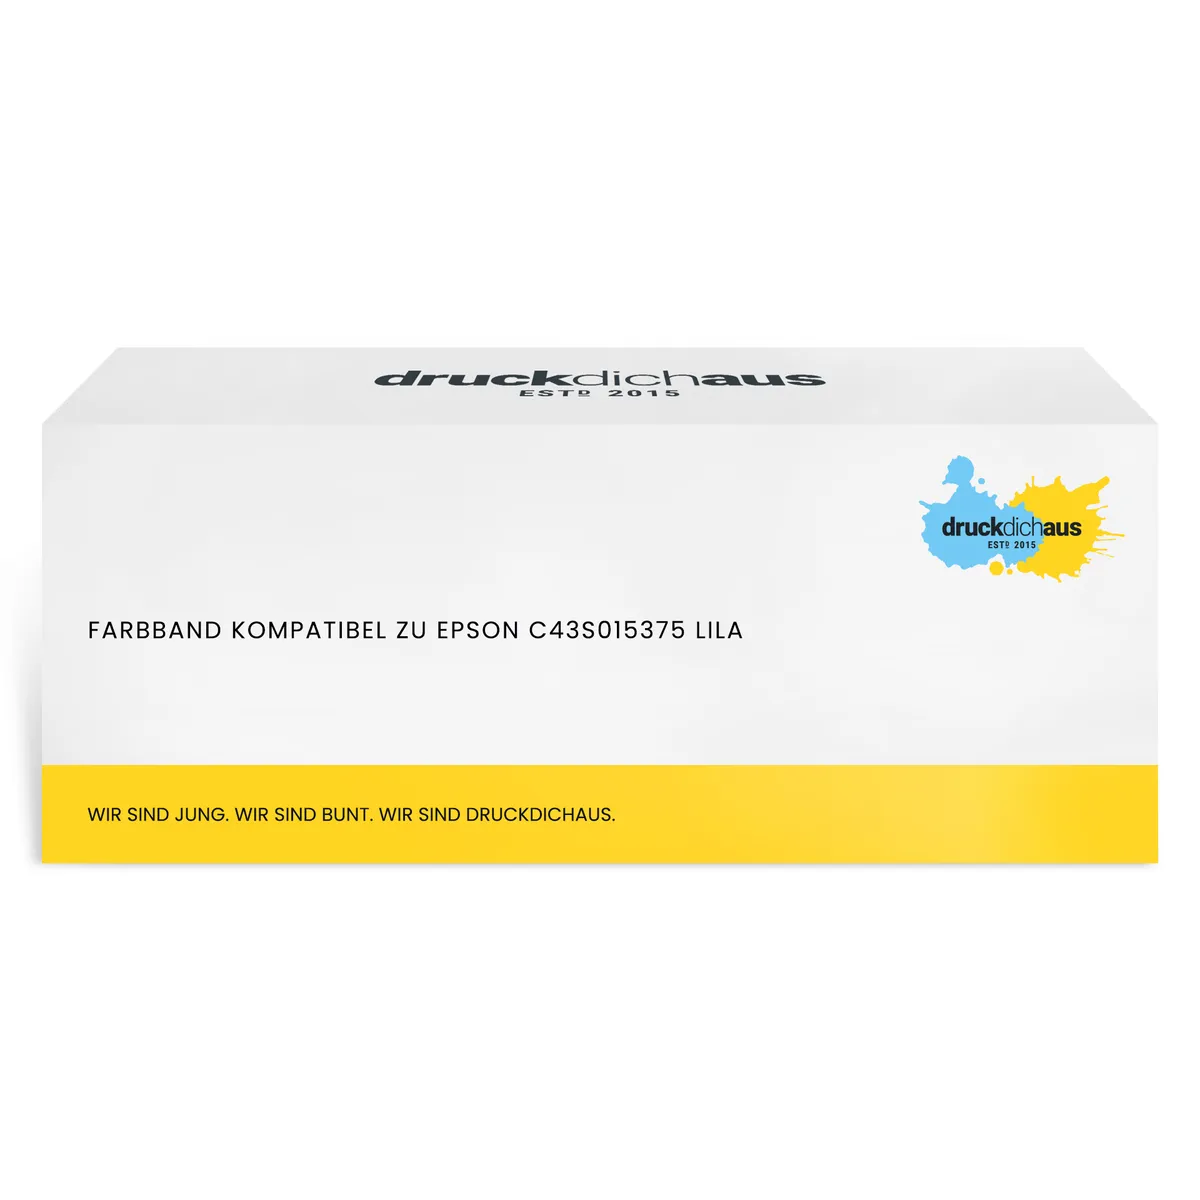 Farbband kompatibel zu Epson C43S015375 lila